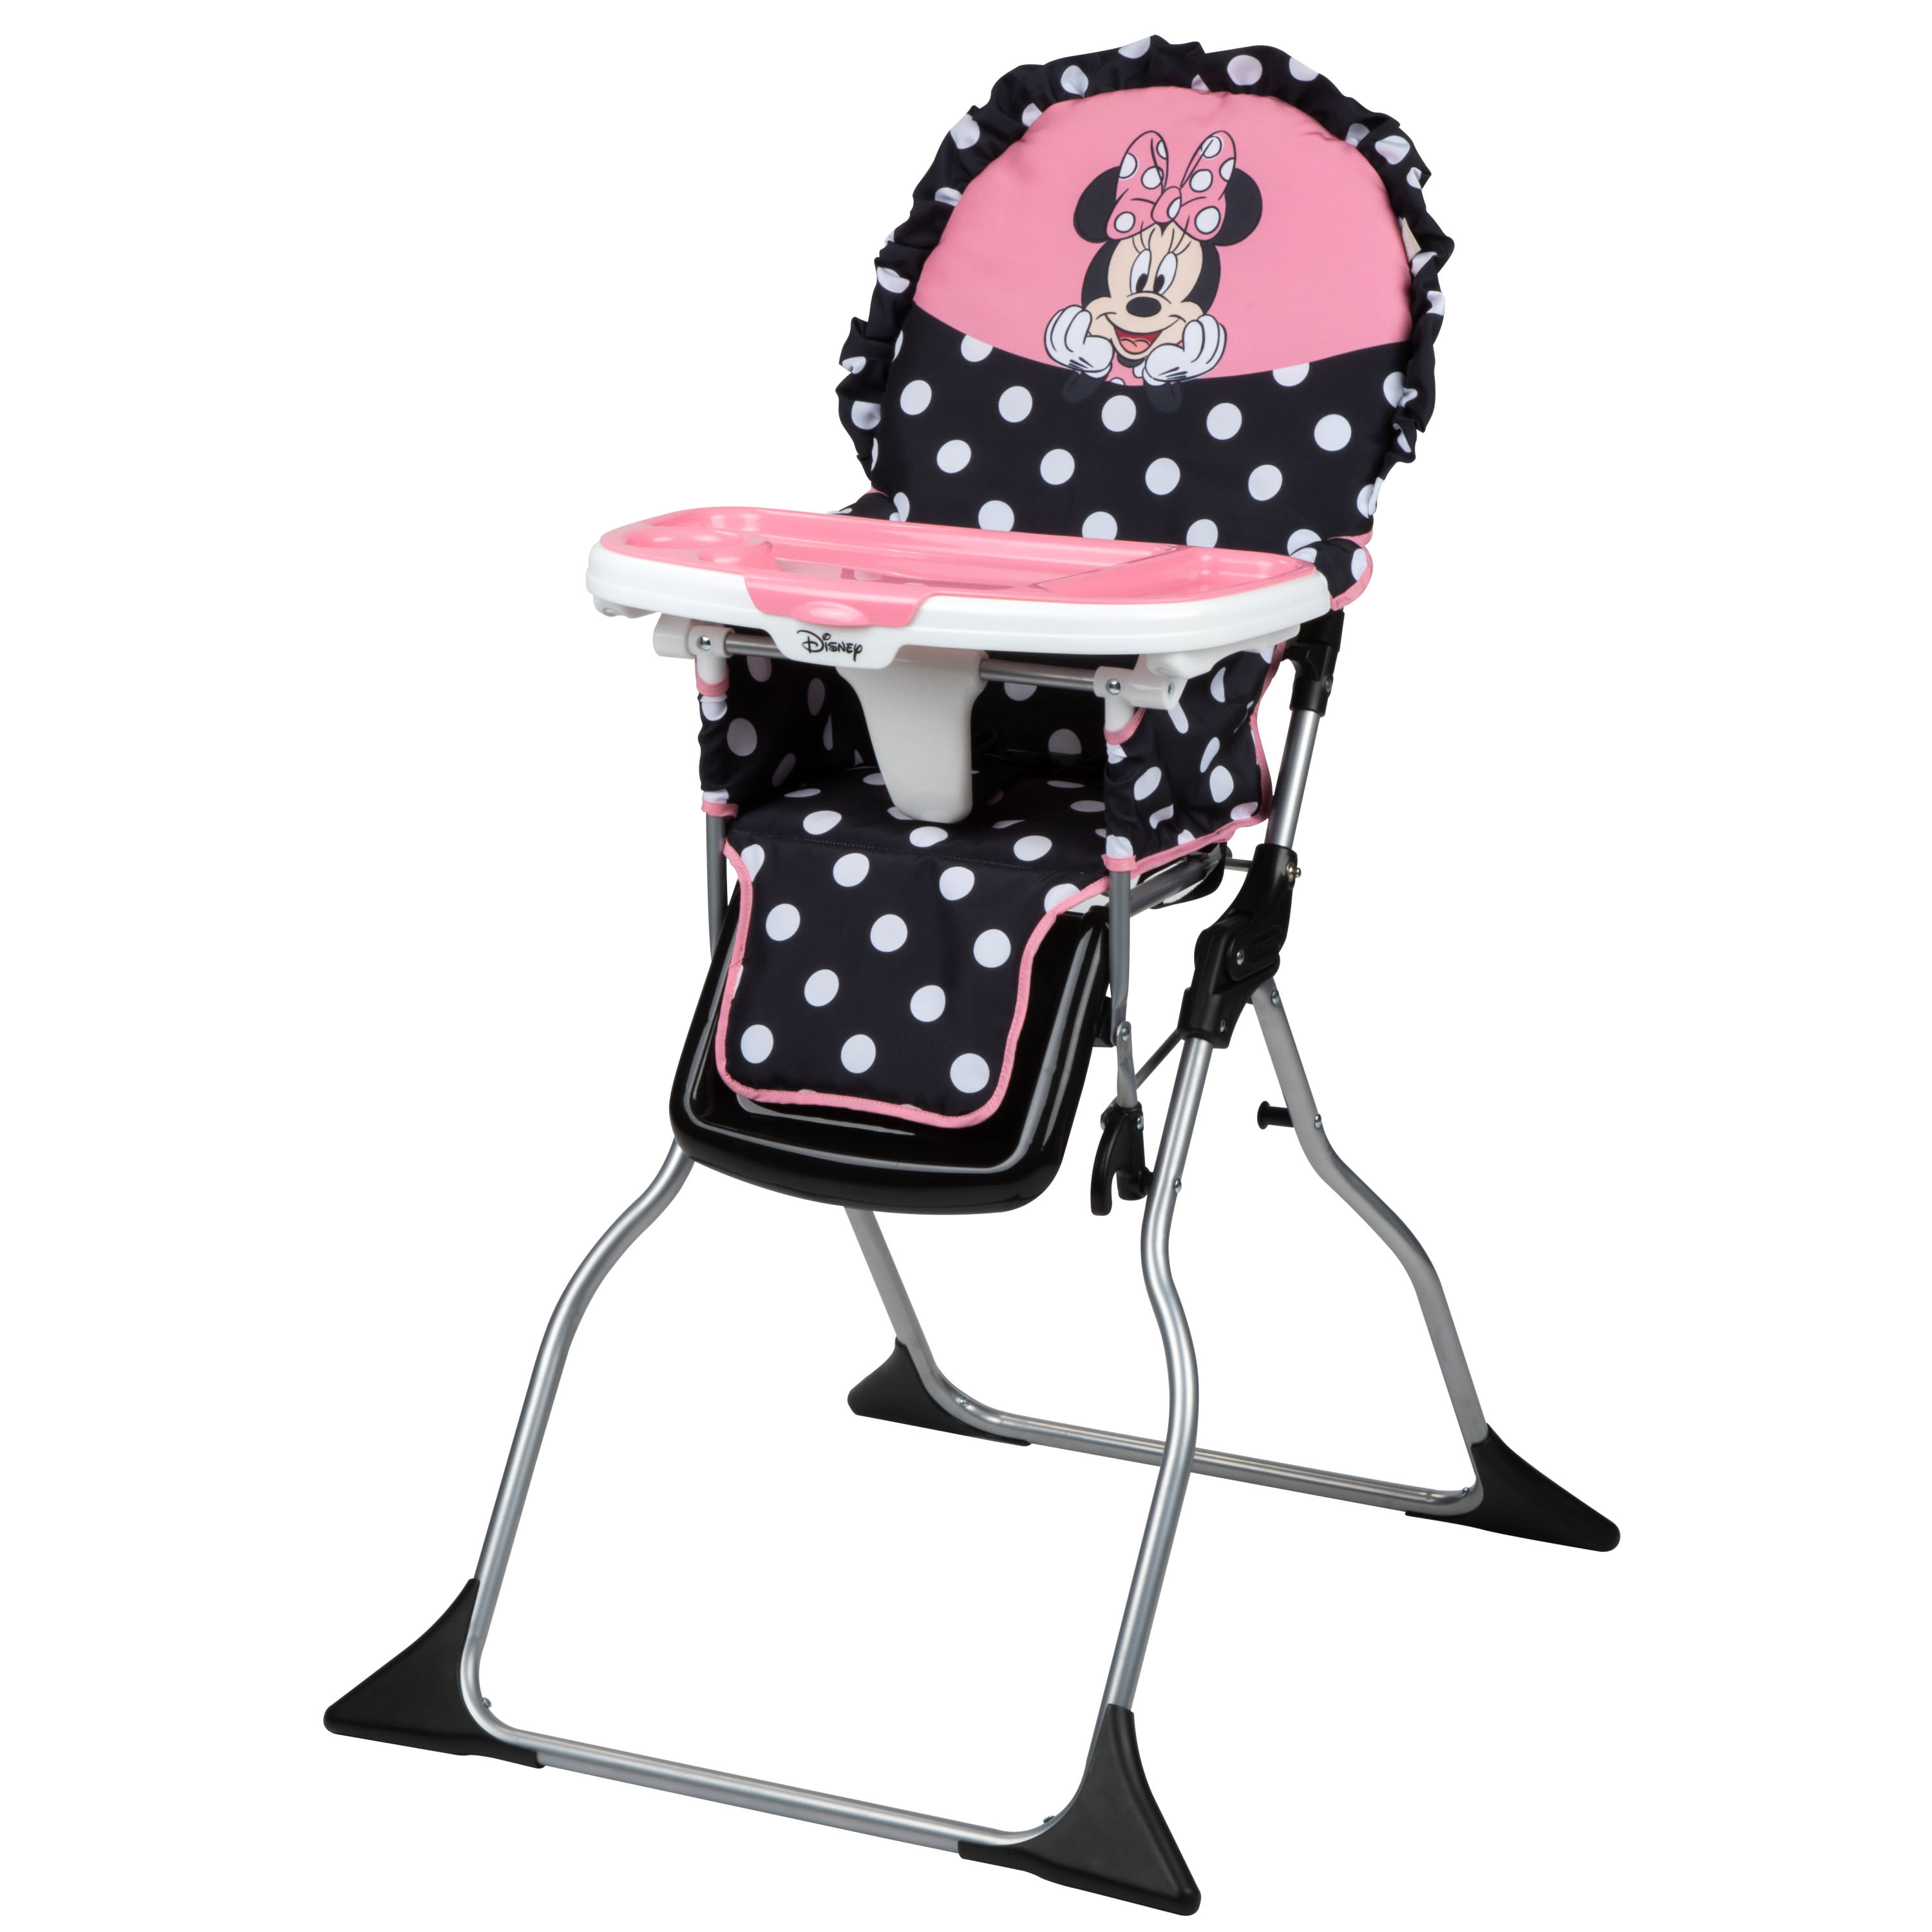 Disney Baby 3D Ultra Full Size High Chair, Peeking Minnie - image 15 of 16